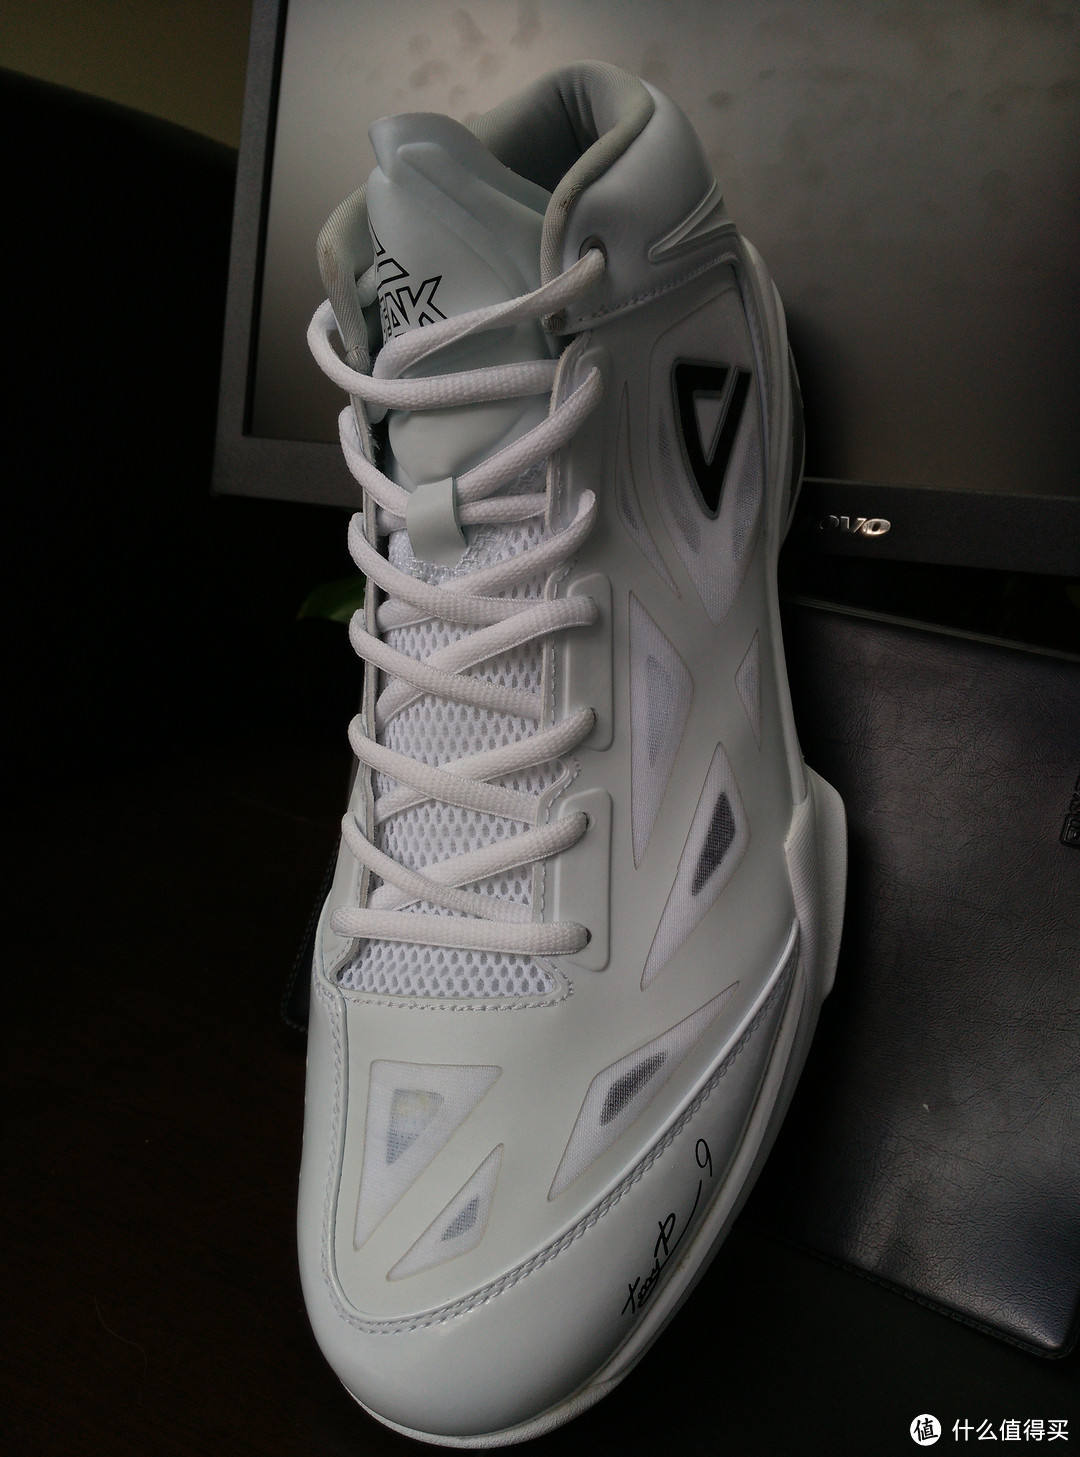 Adidas 阿迪达斯 D Rose Dominate 罗斯 篮球鞋 & Peak 匹克 TP9 帕克 篮球鞋 晒单及穿着感受